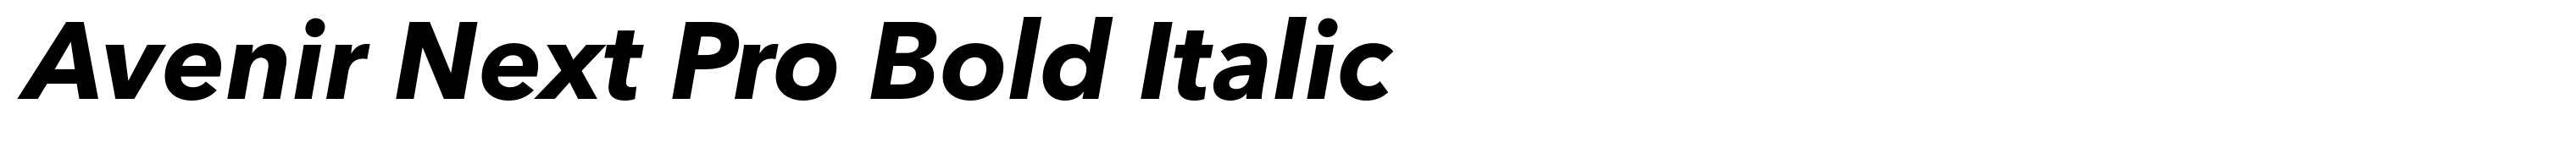 Avenir Next Pro Bold Italic